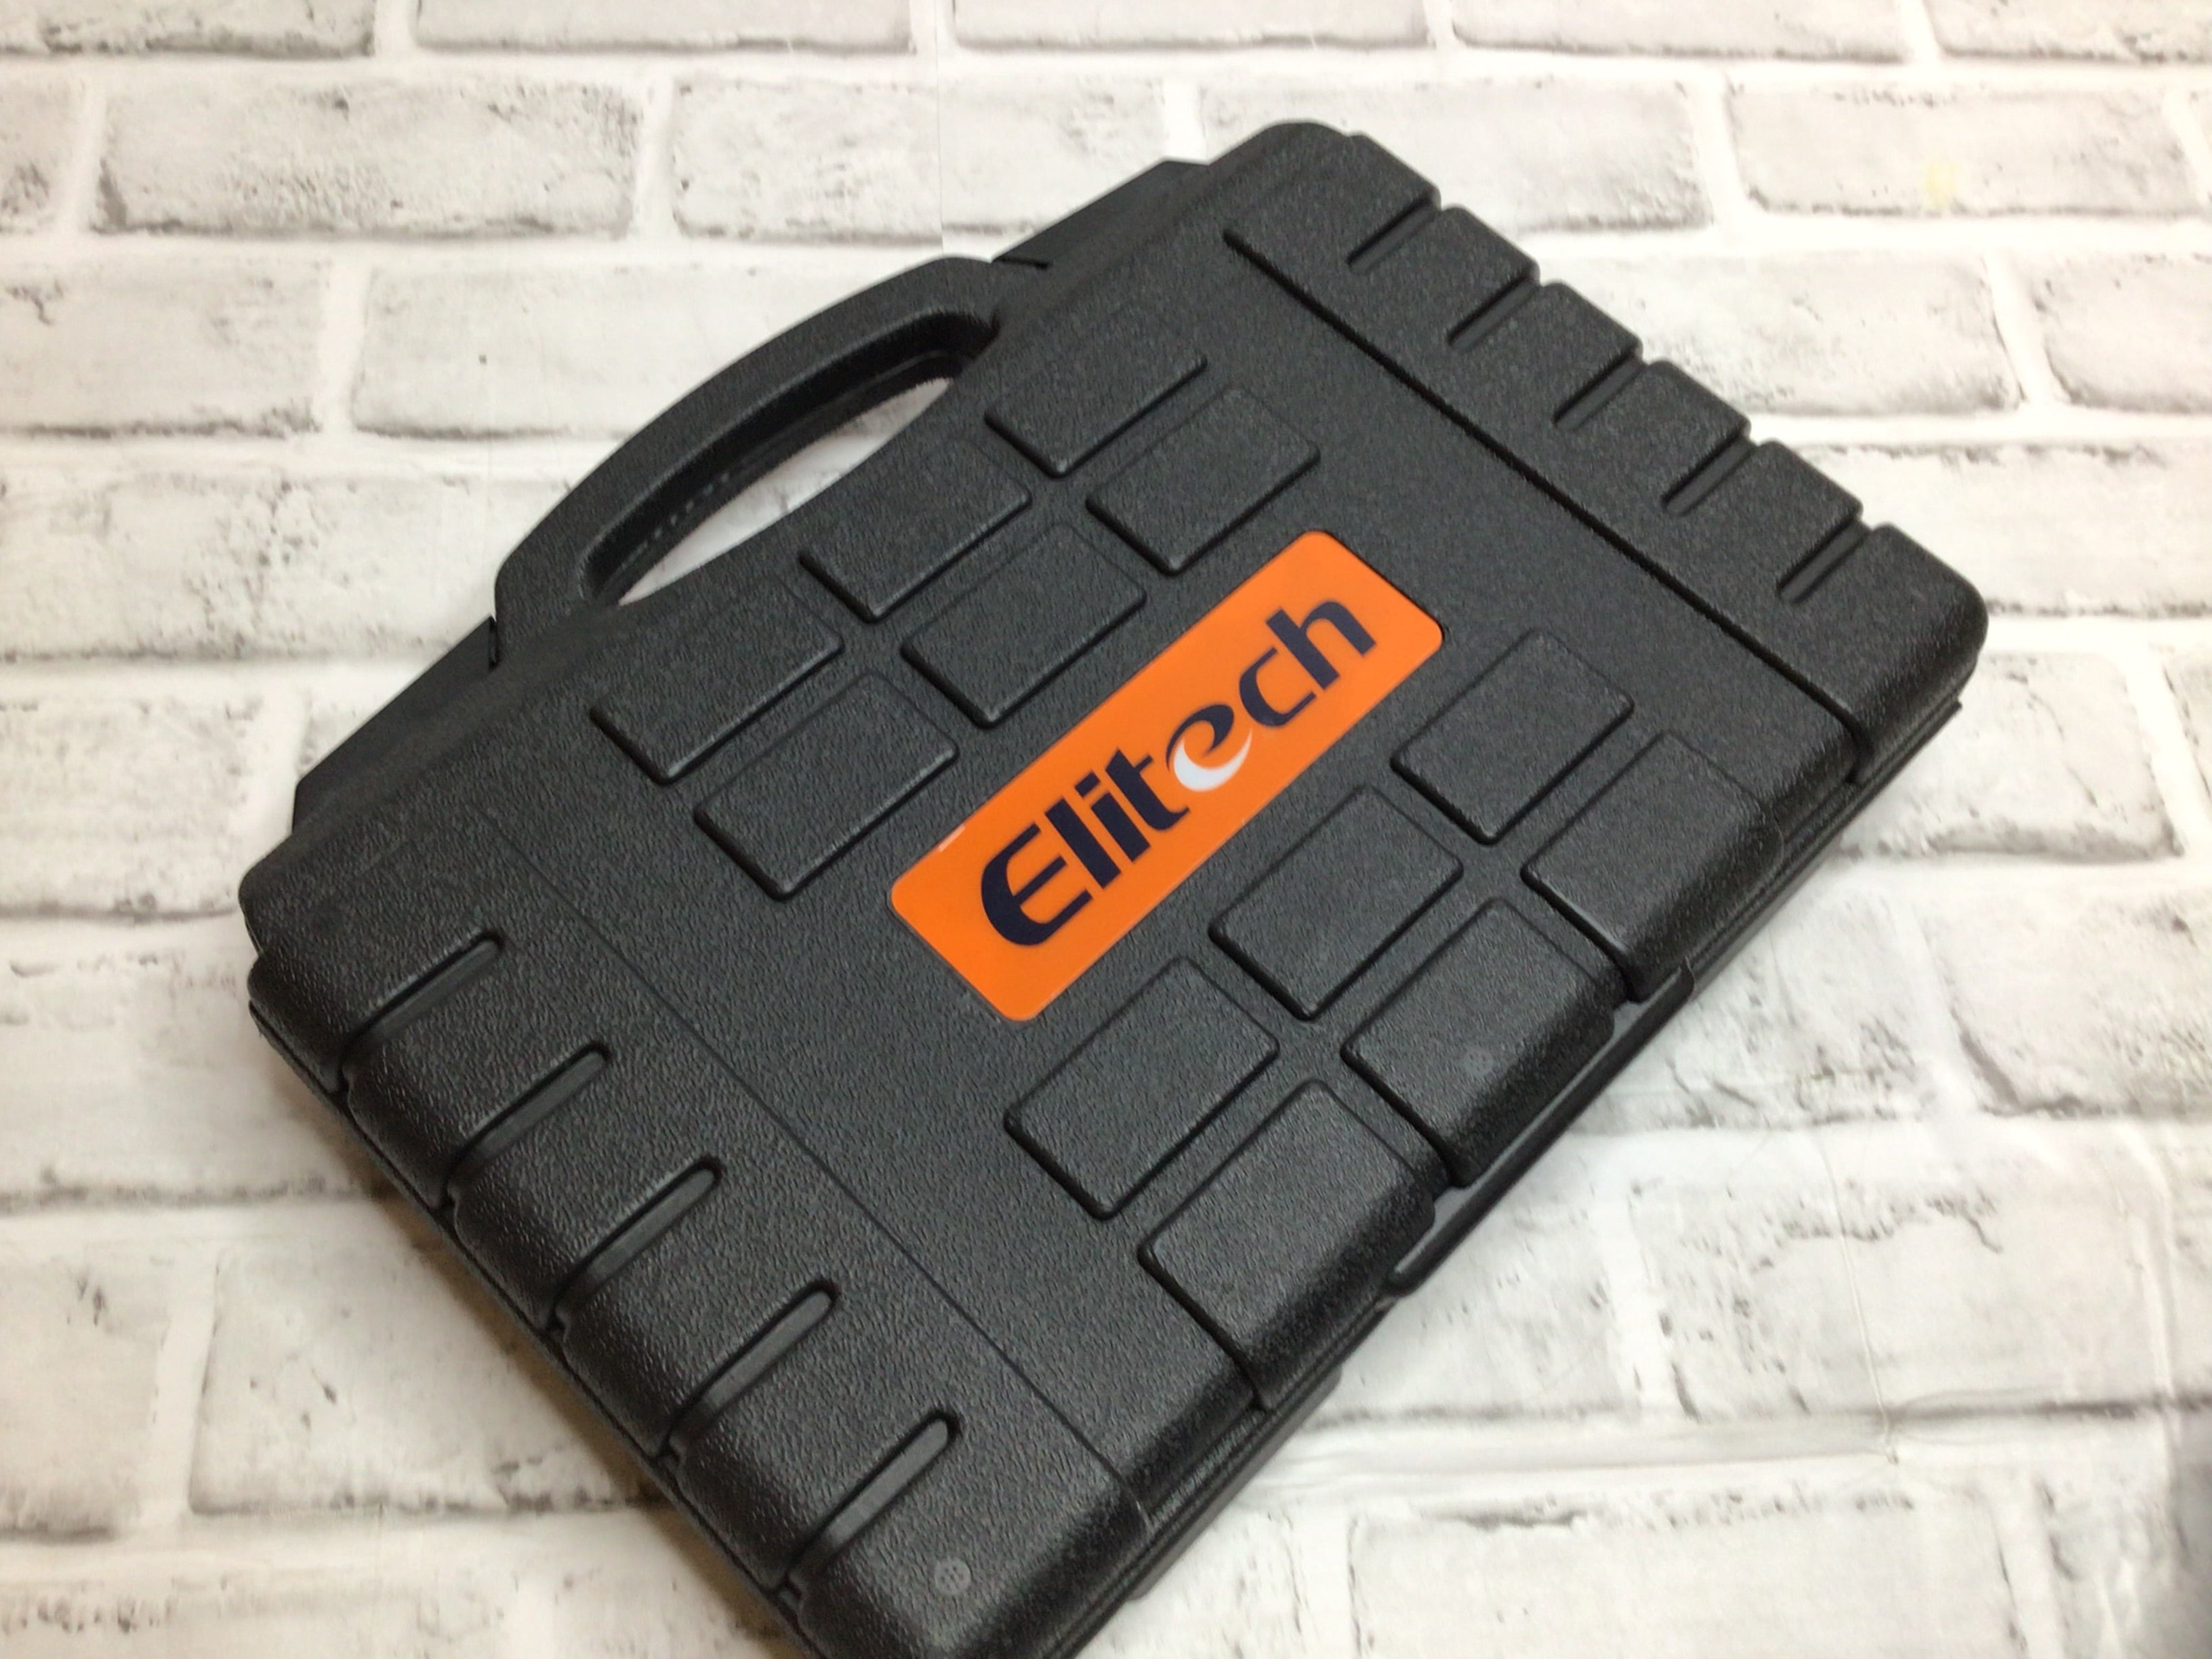 Elitech ILD-300 Advanced Refrigerant Leak Detector Freon Gas Detector W/Case (8080360014062)